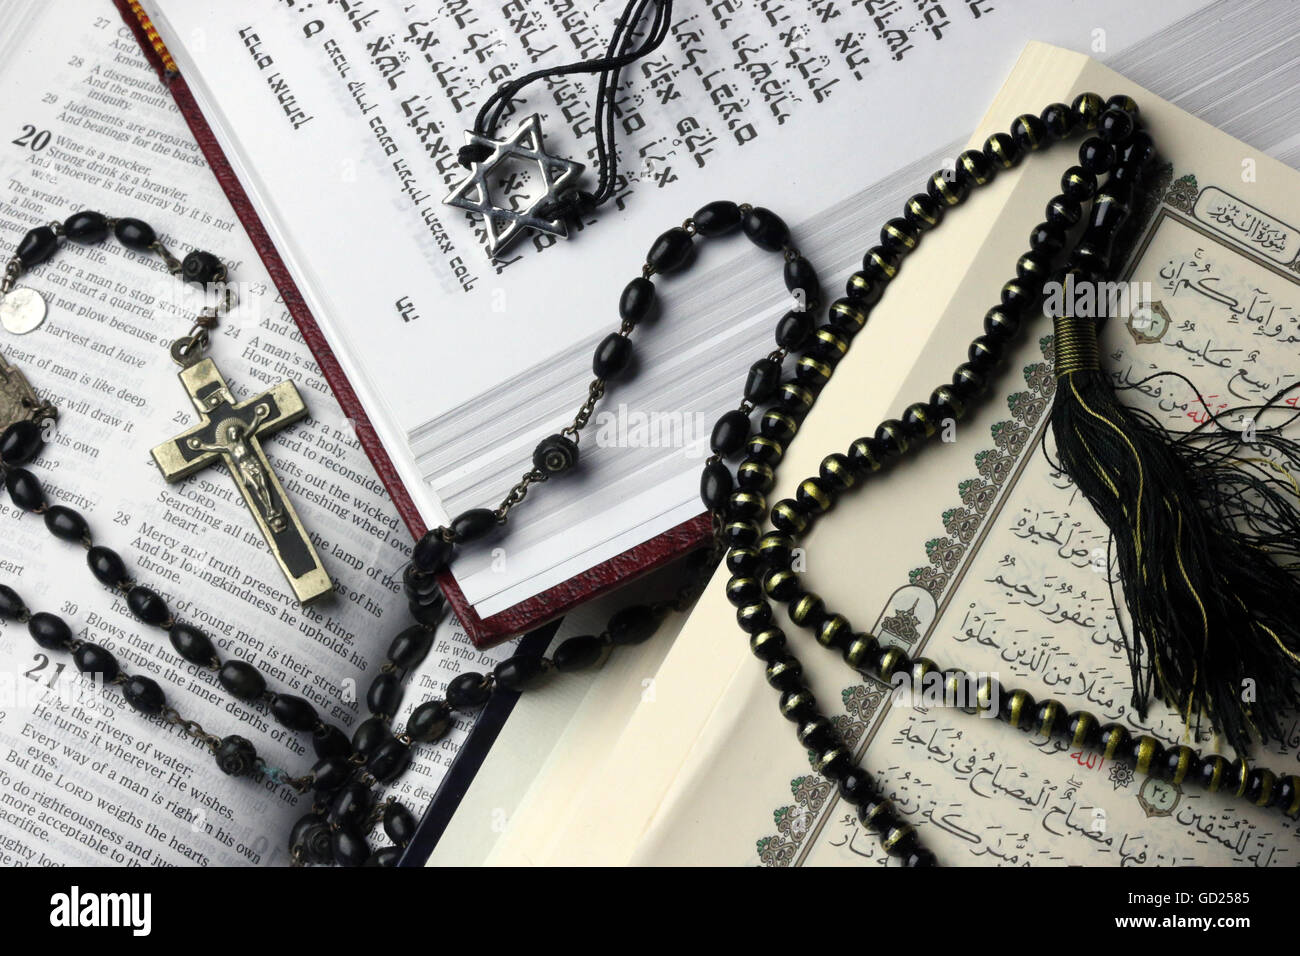 Bibbie e Corano, interfaith simboli del cristianesimo islam ed ebraismo, le tre religioni monoteiste, Alta Savoia, Francia Foto Stock